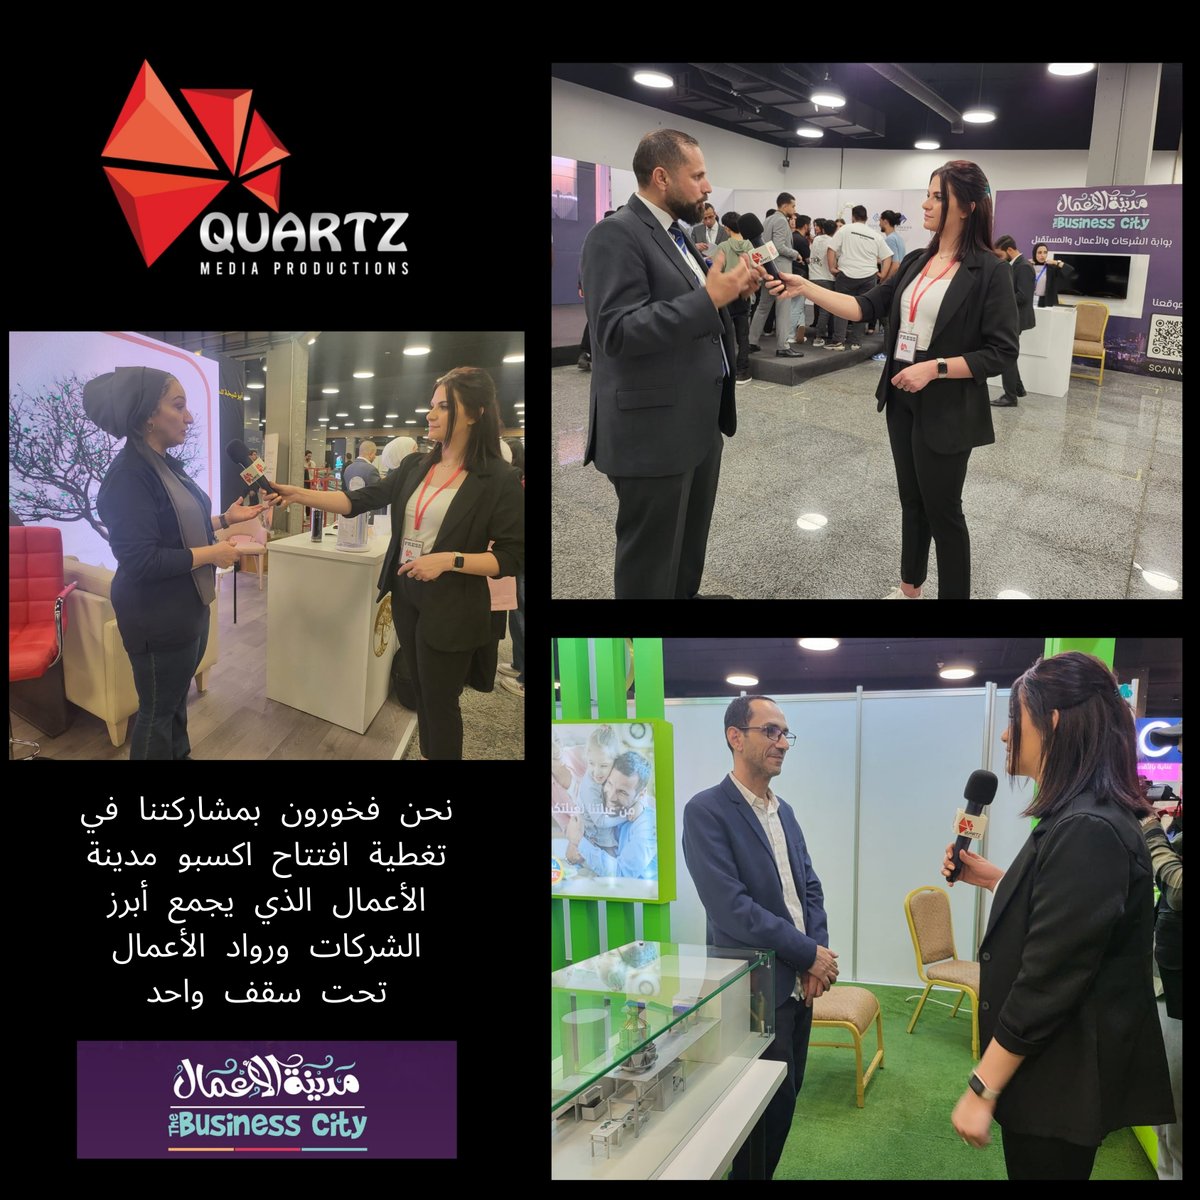 Quartz Media Production

#افتتاح #expocity #اكسبو #تغطية #مكة_مول #تصوير #businesshub #اعمال #business #jordan #تسويق #expo #B2C #businessowner #b2b #opportunity #companies